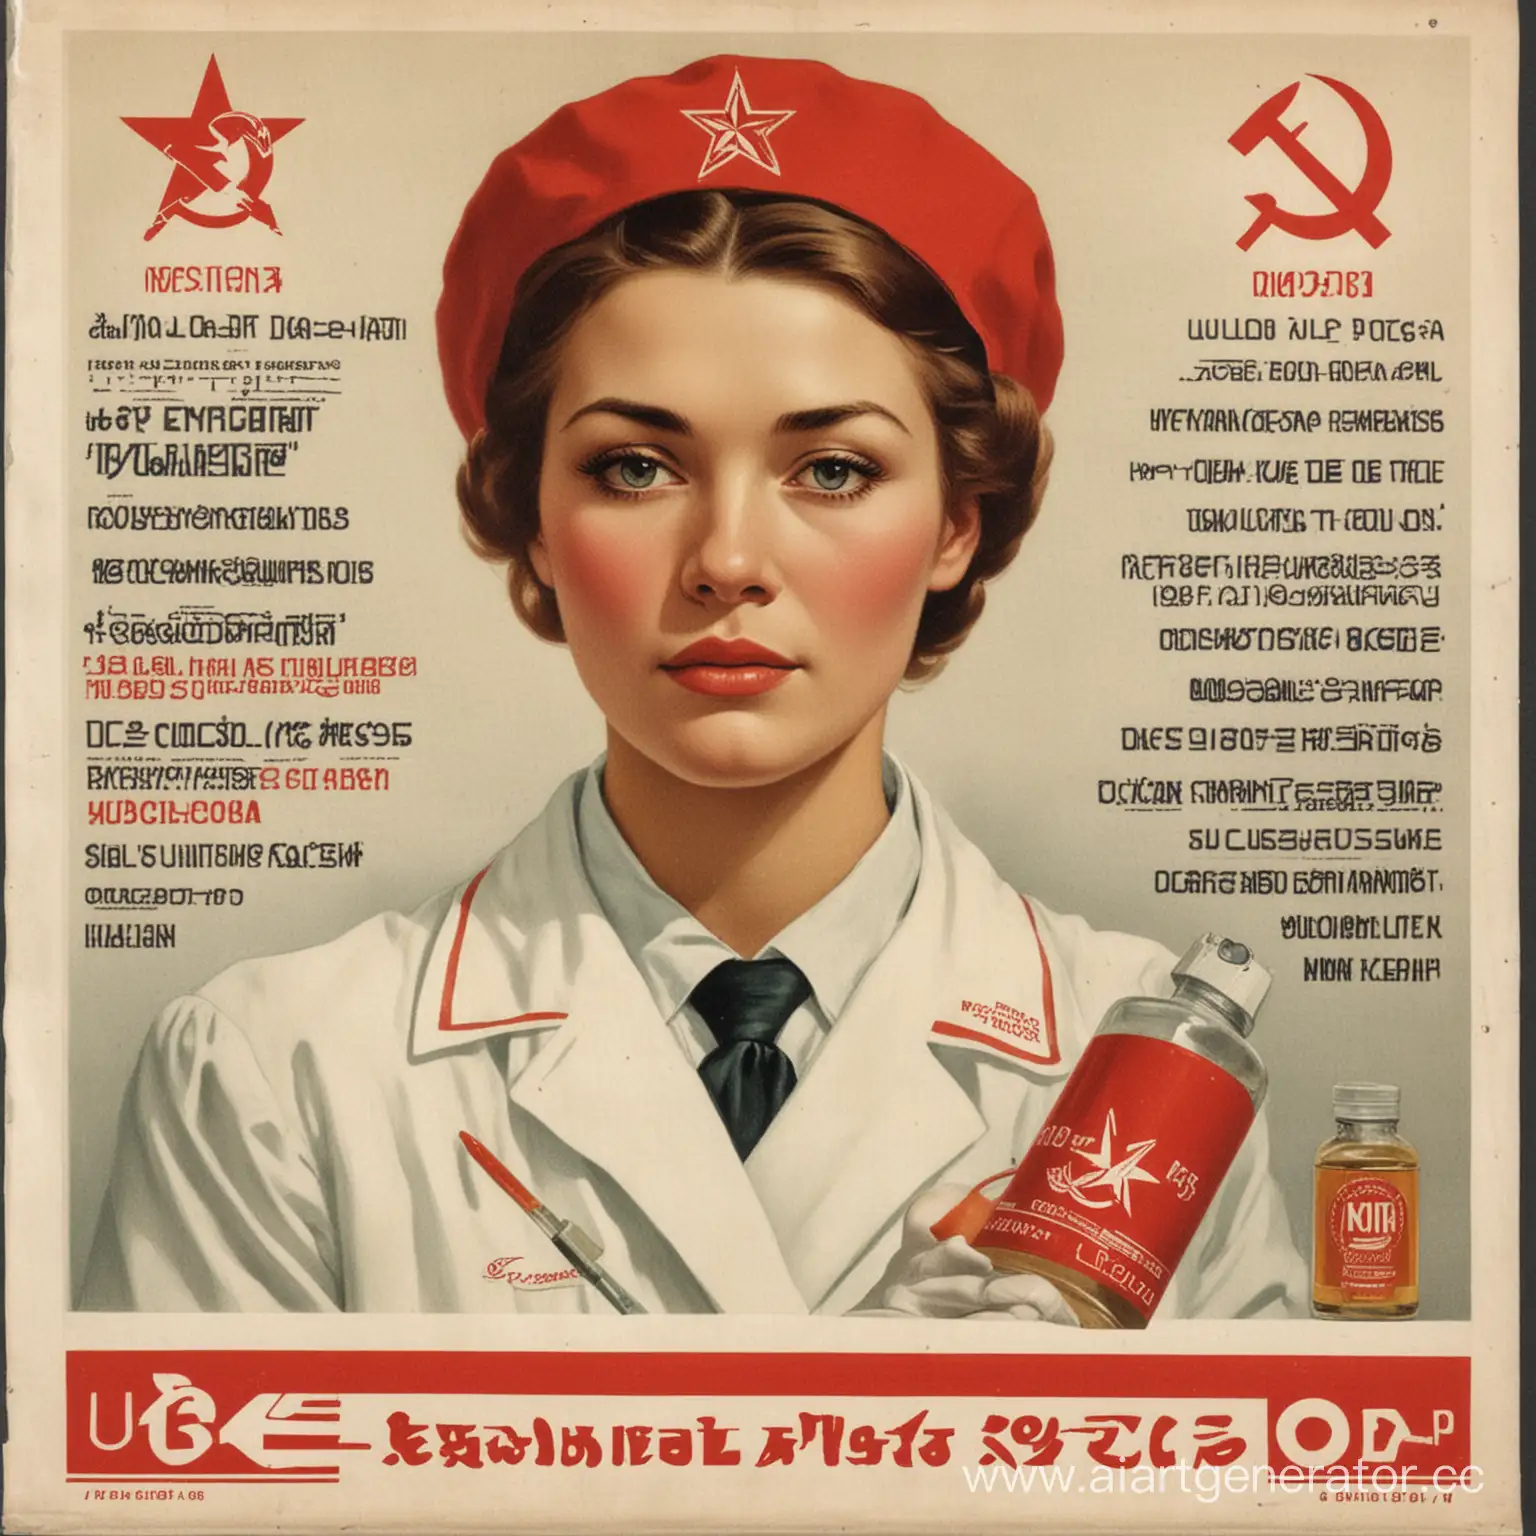 Historical-Illustration-Soviet-Era-Medical-Practice-in-the-USSR